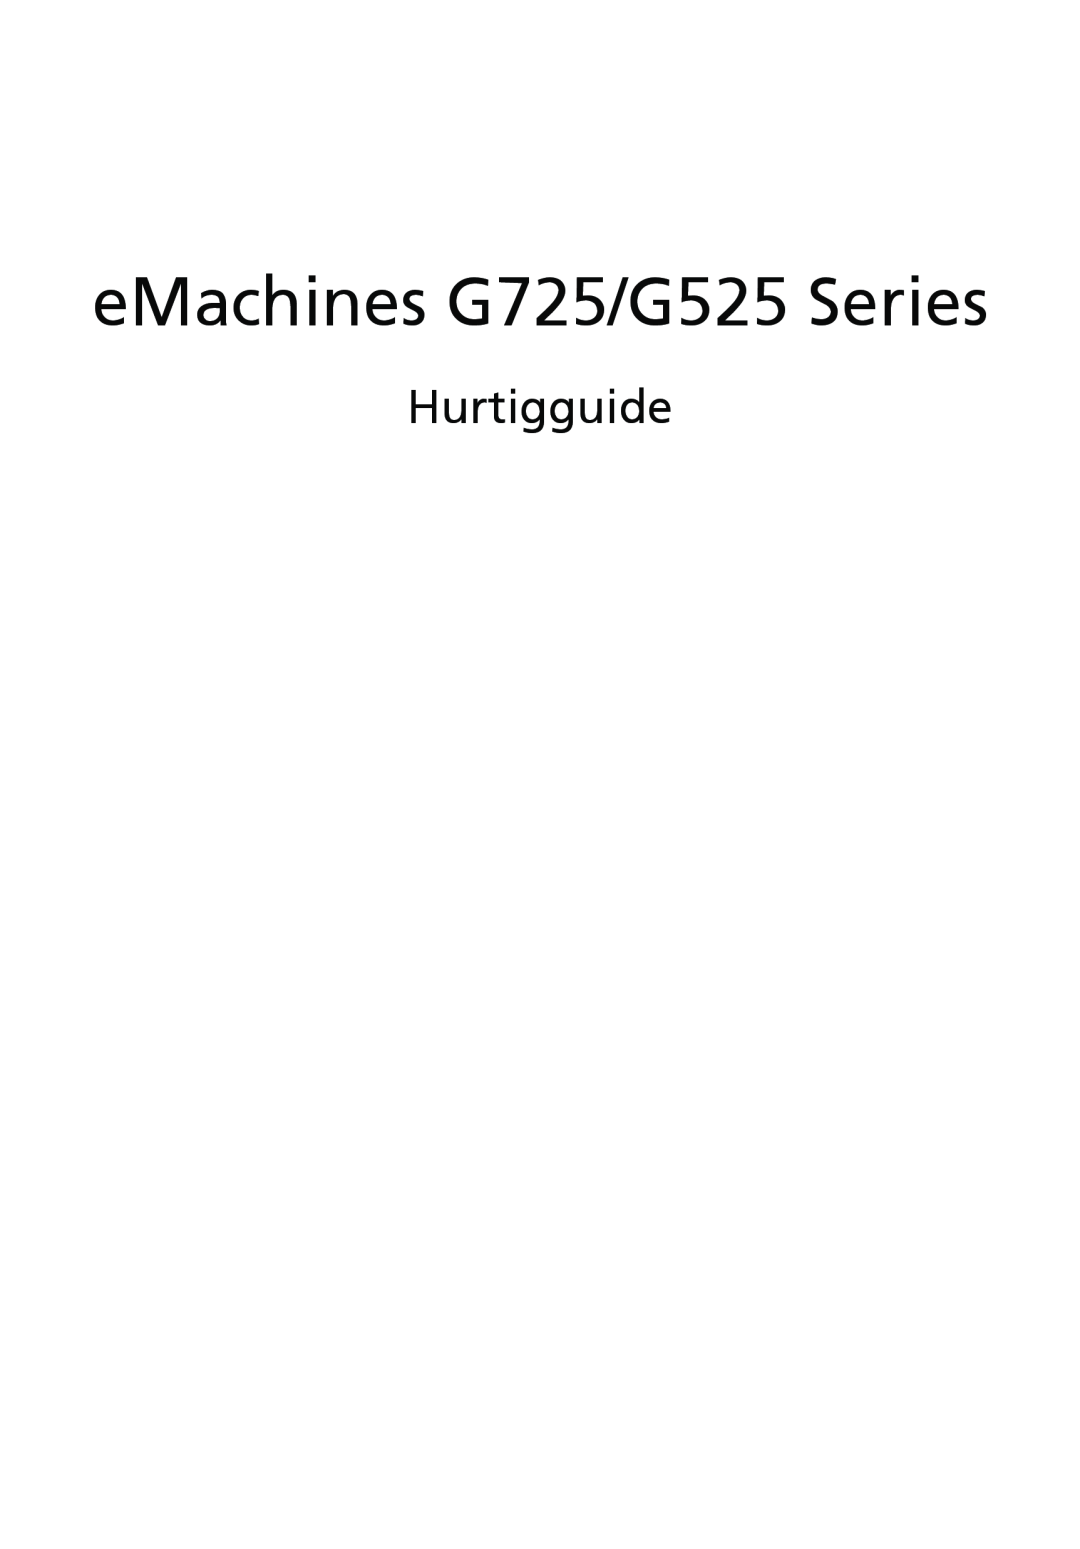 eMachines manual Hurtigguide, eMachines G725/G525 Series 